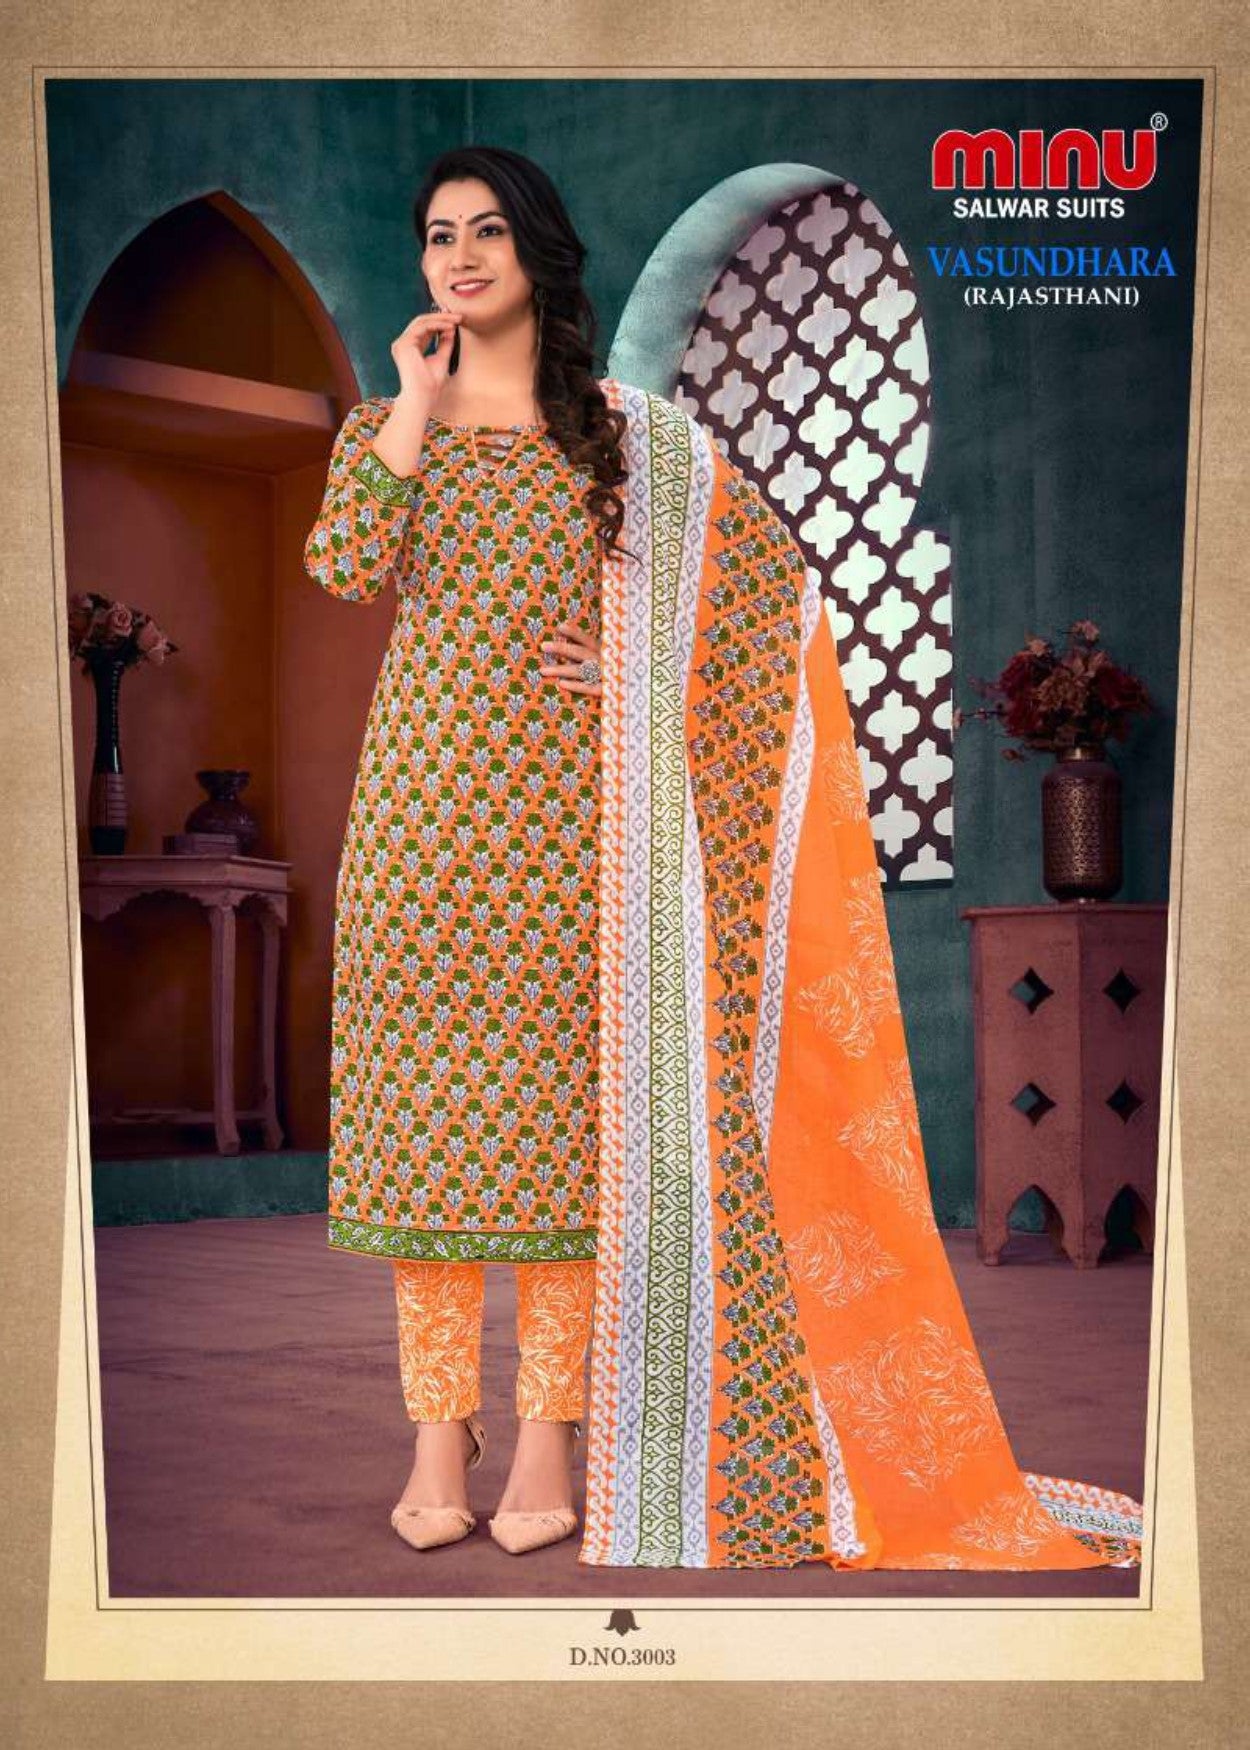 Buy Congenial Women's Trditional Rayon Rajasthani Bandhani Dress Material  (Brown) at Amazon.in